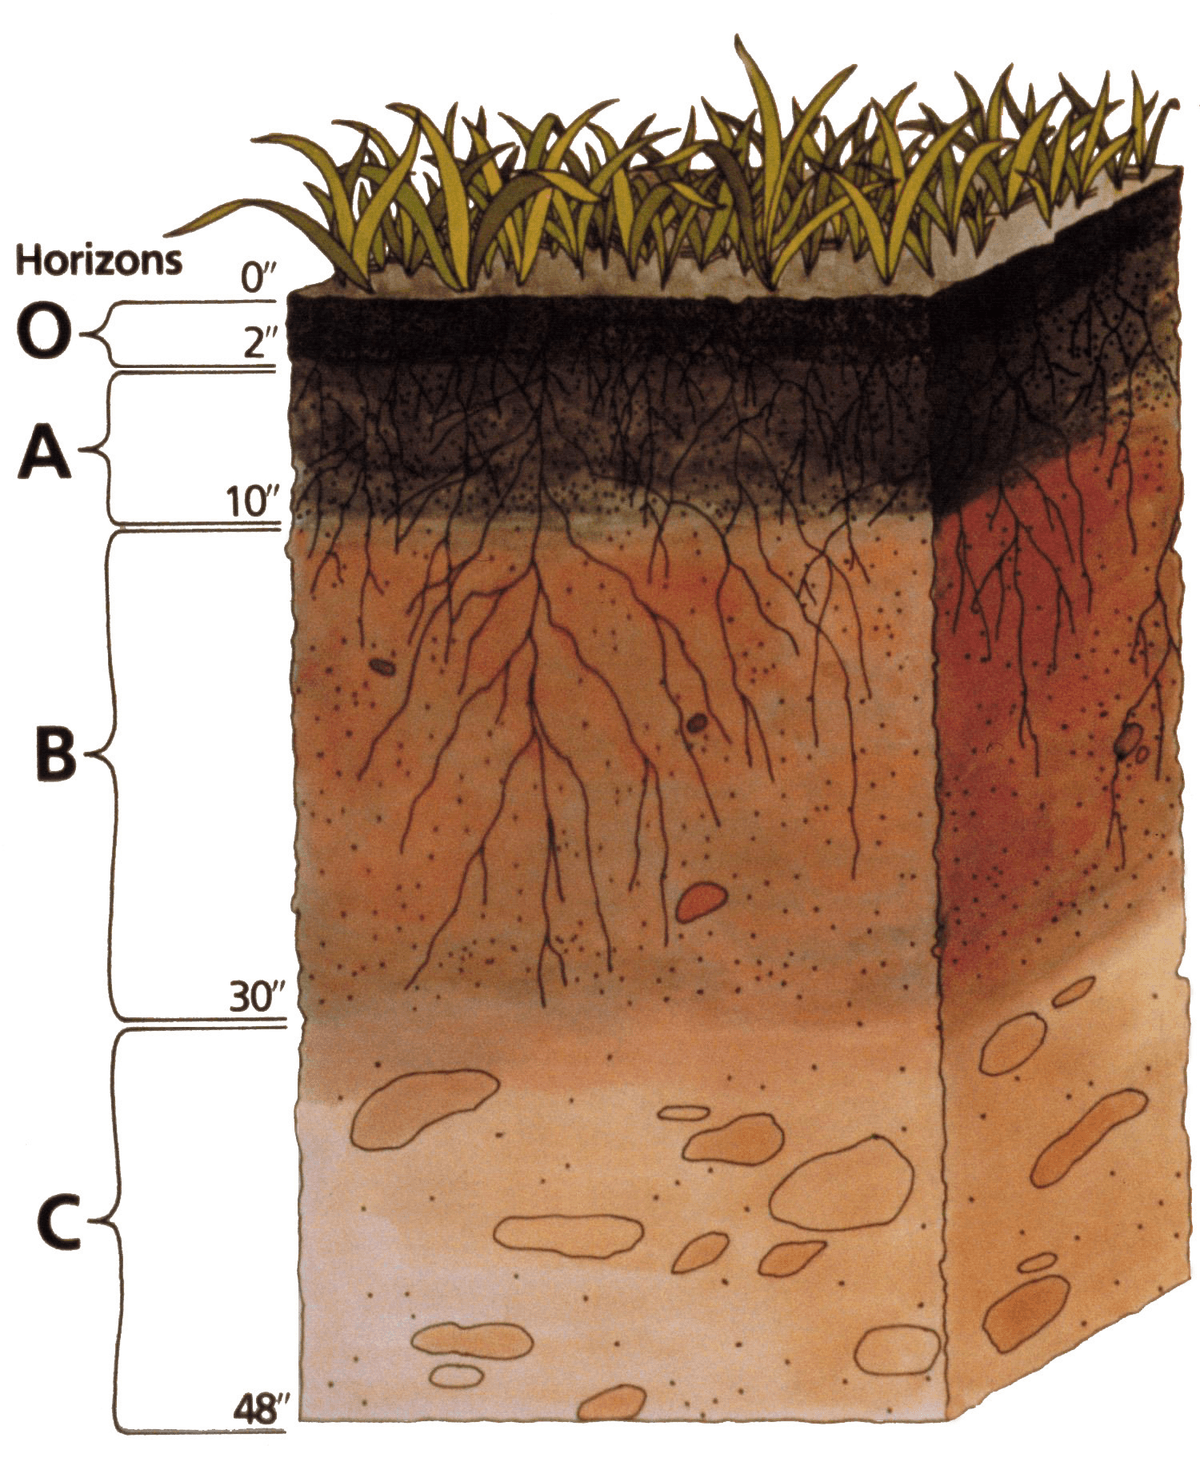 Perubahan tanah dapat terjadi secara alami dan akibat aktivitas manusia. manakah diantara perubahan tanah berikut ini yang hanya disebabkan oleh faktor alami?